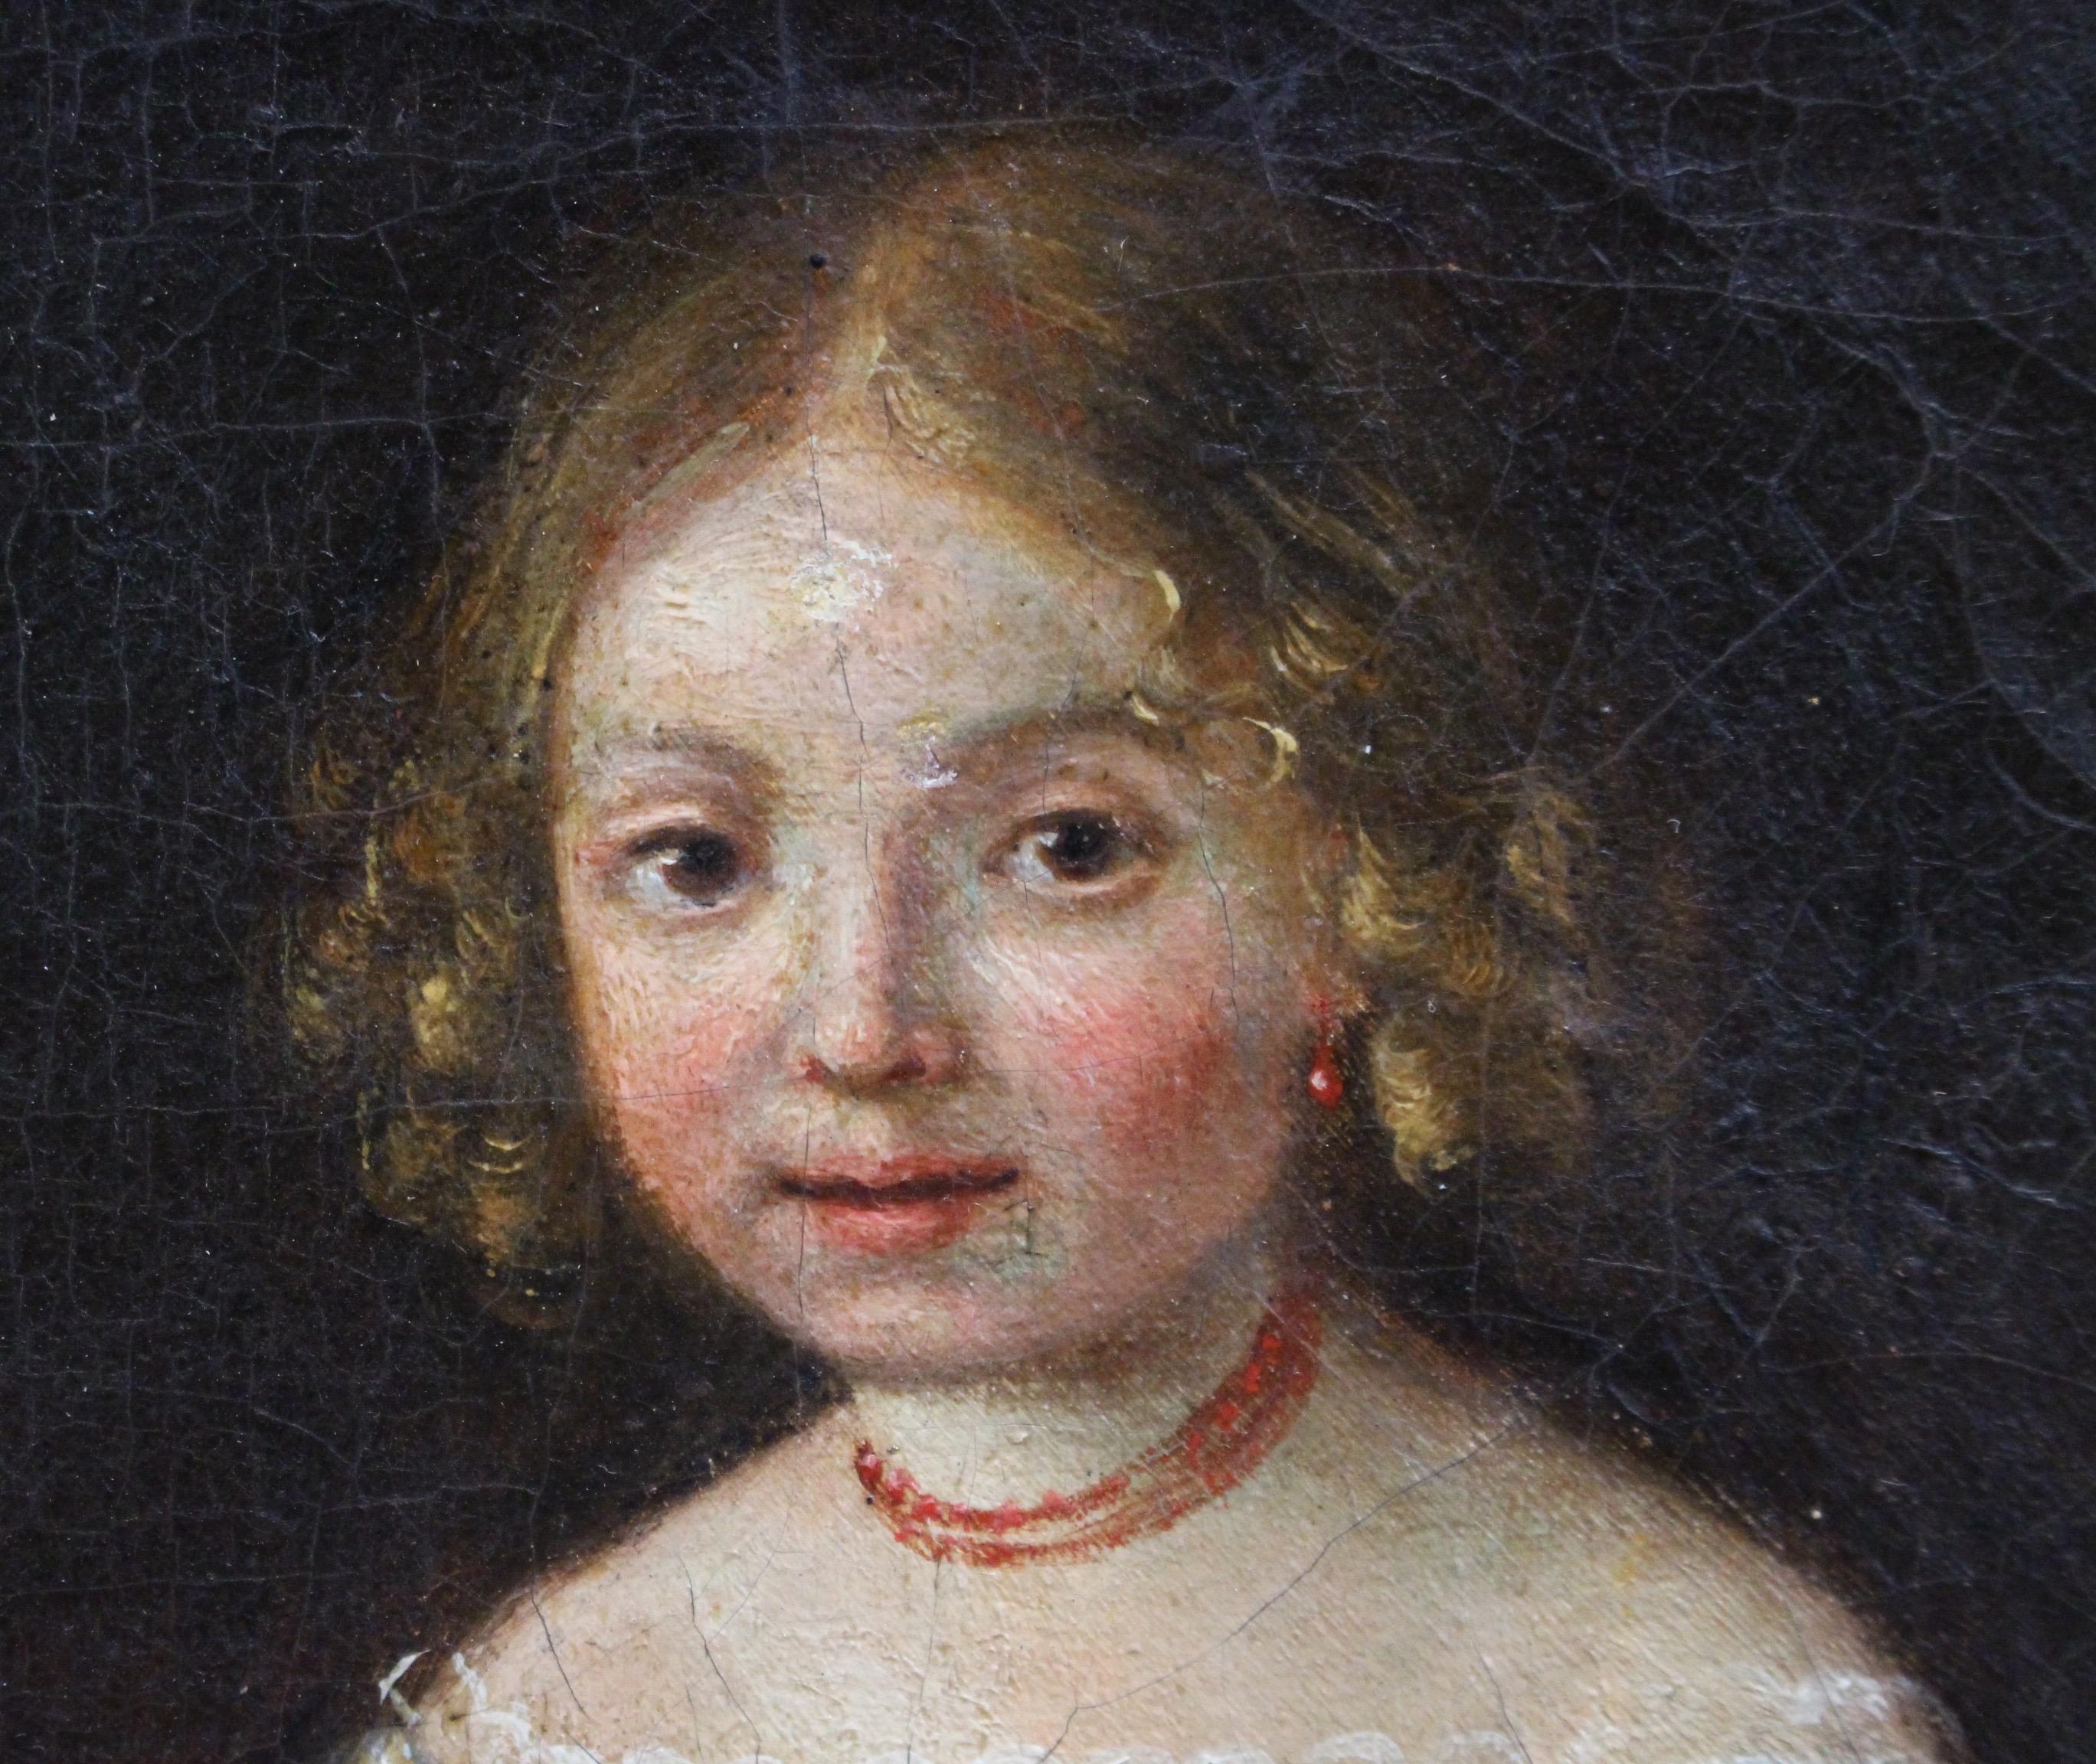 18th century doll